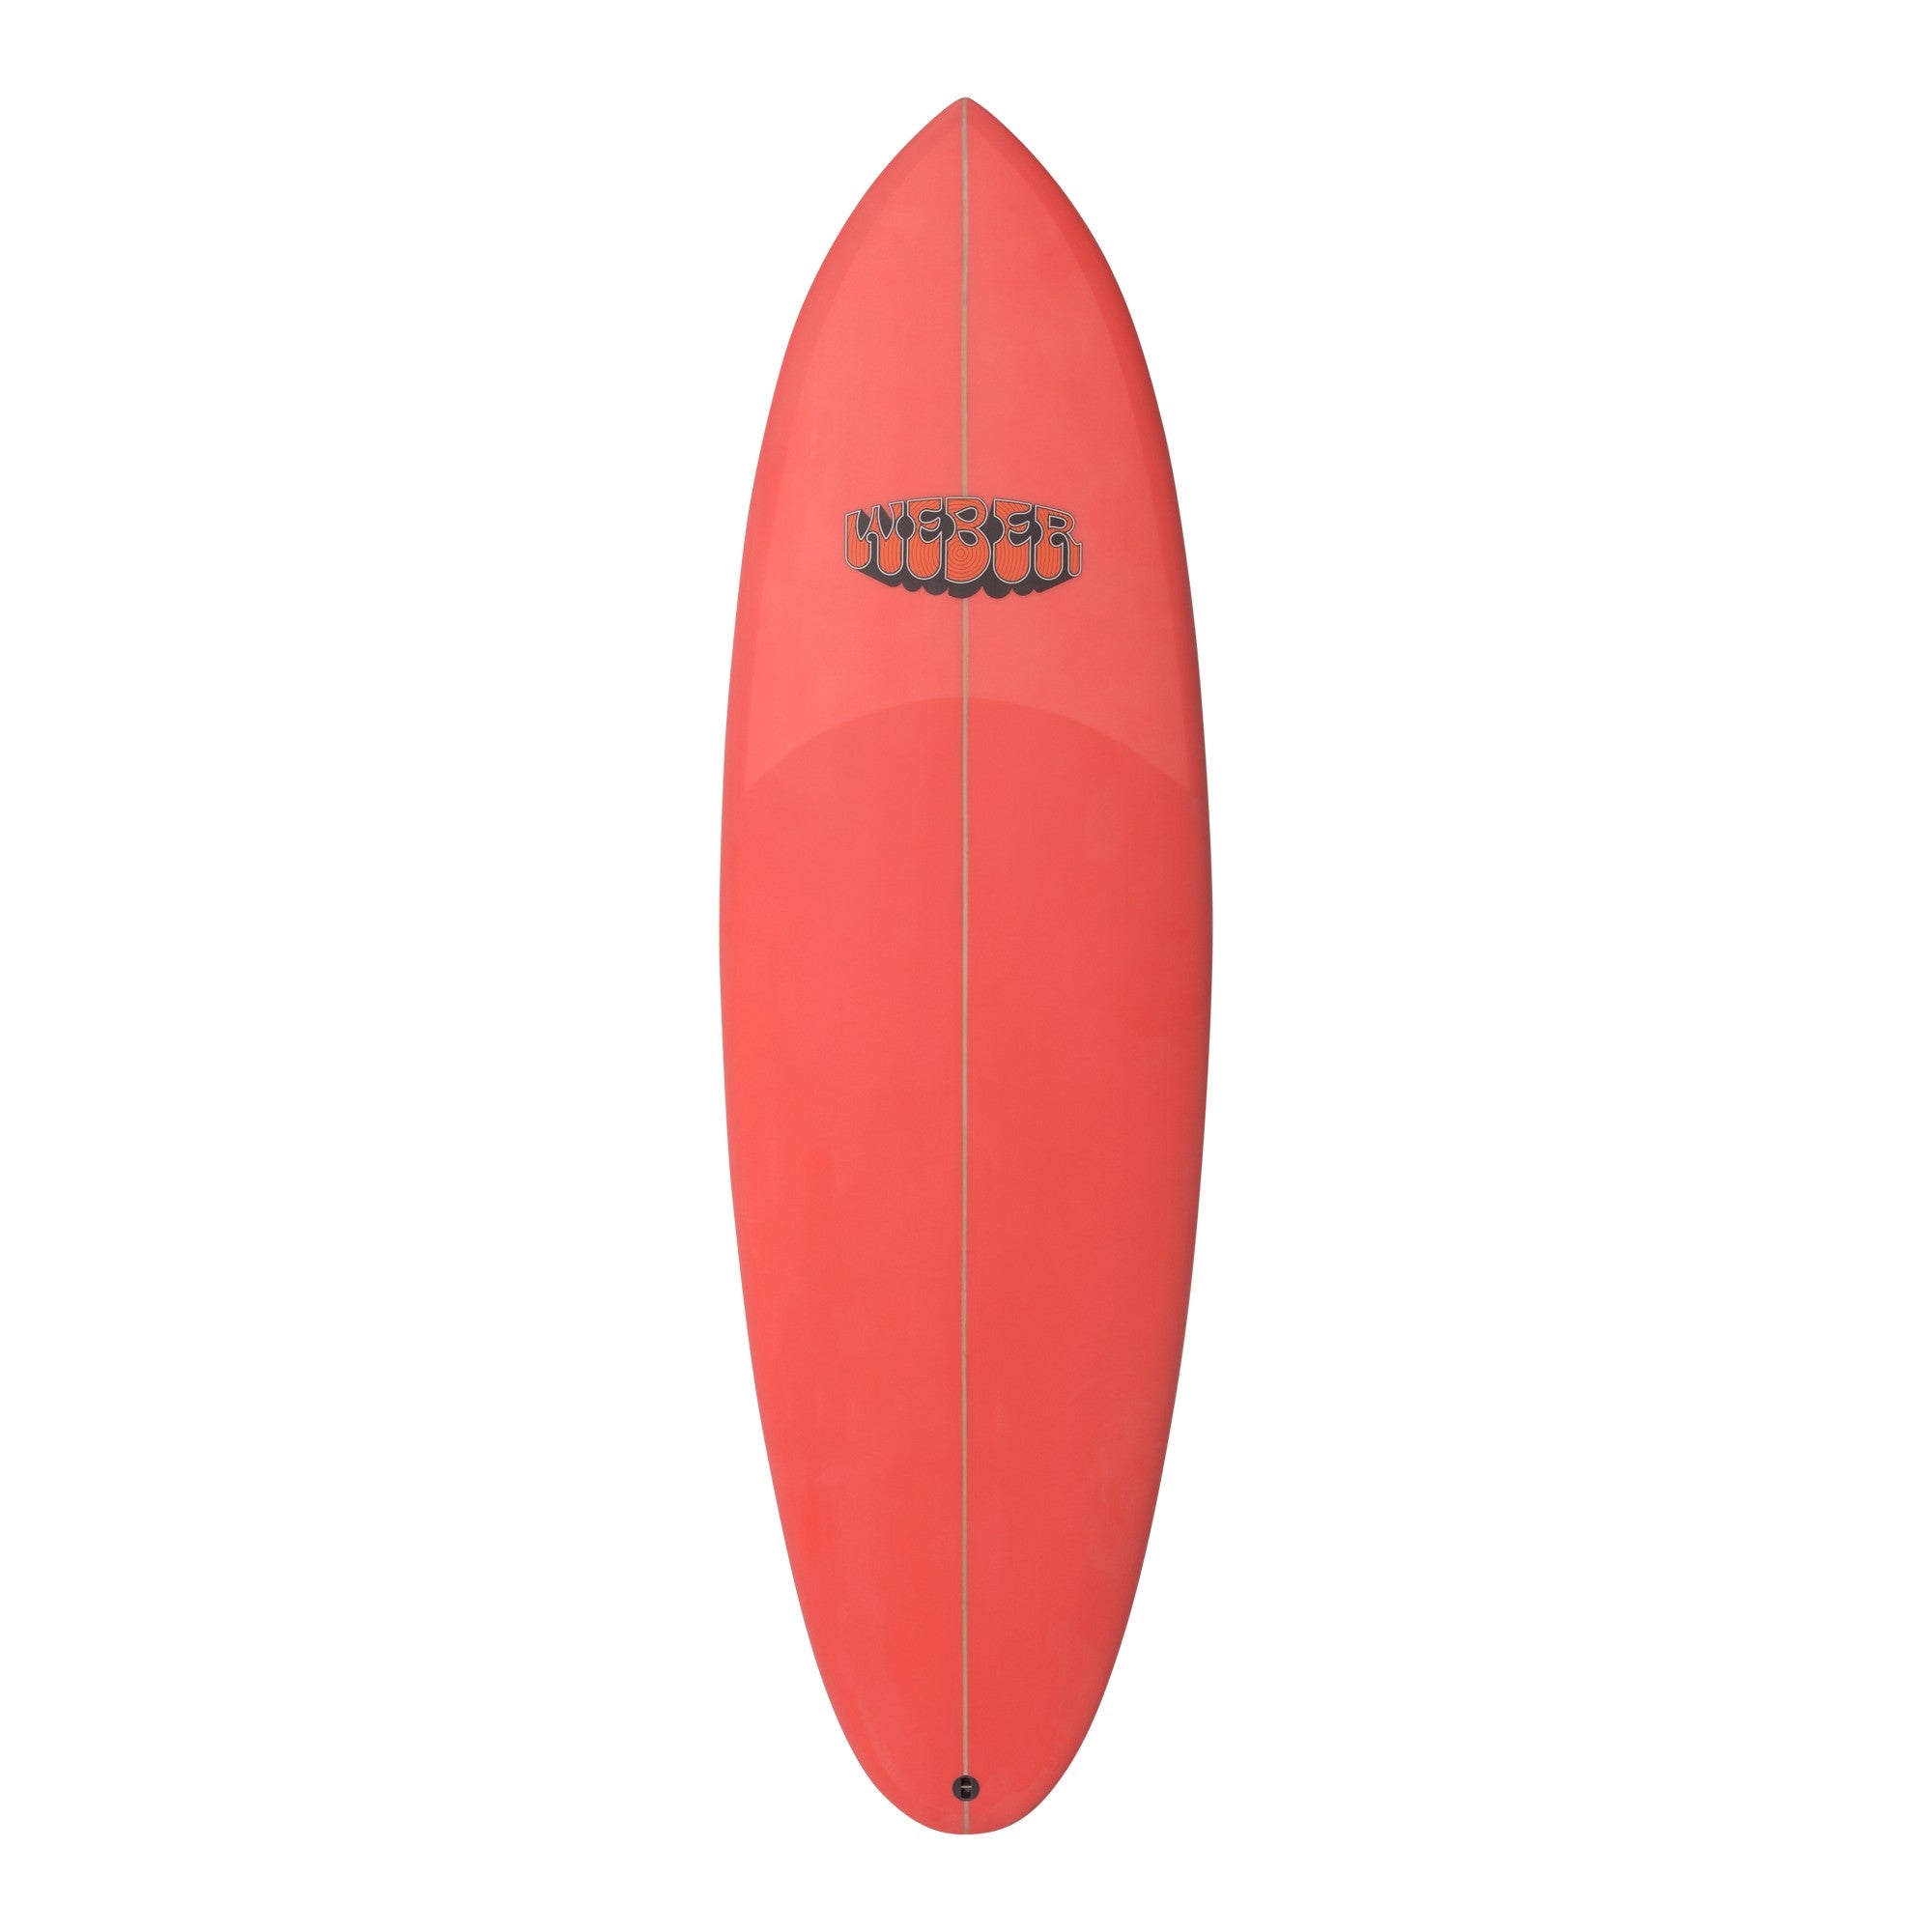 WEBER SURFBOARDS - Easy Rider 6'3 - Red